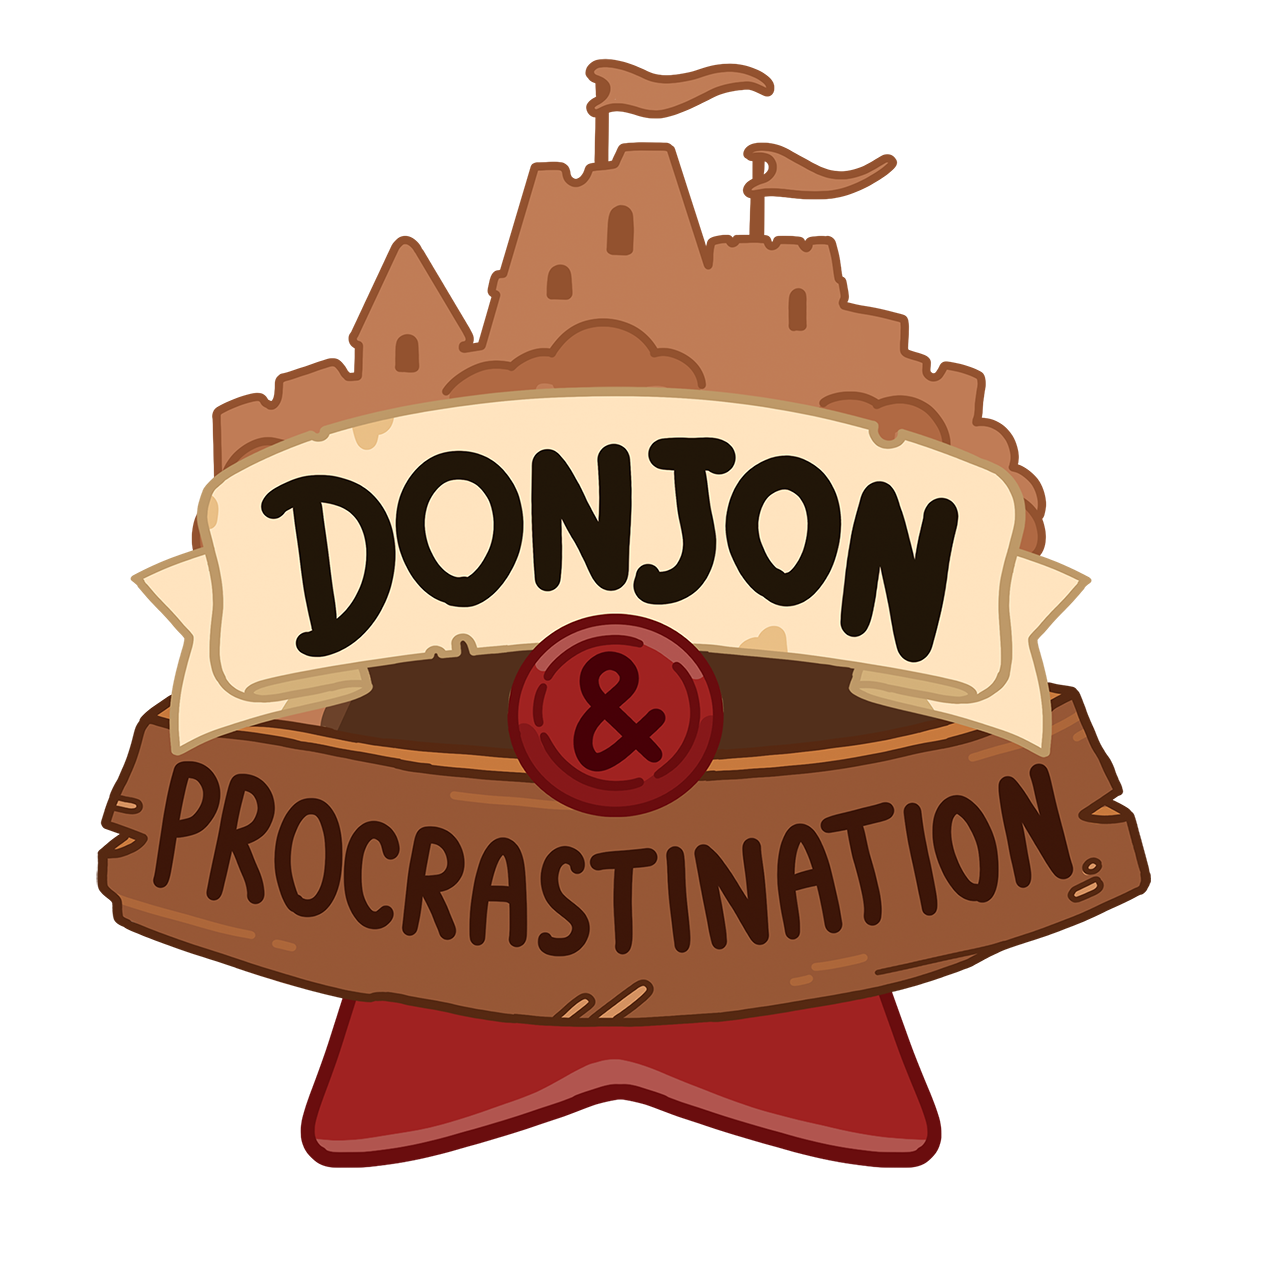 Donjon & Procrastination